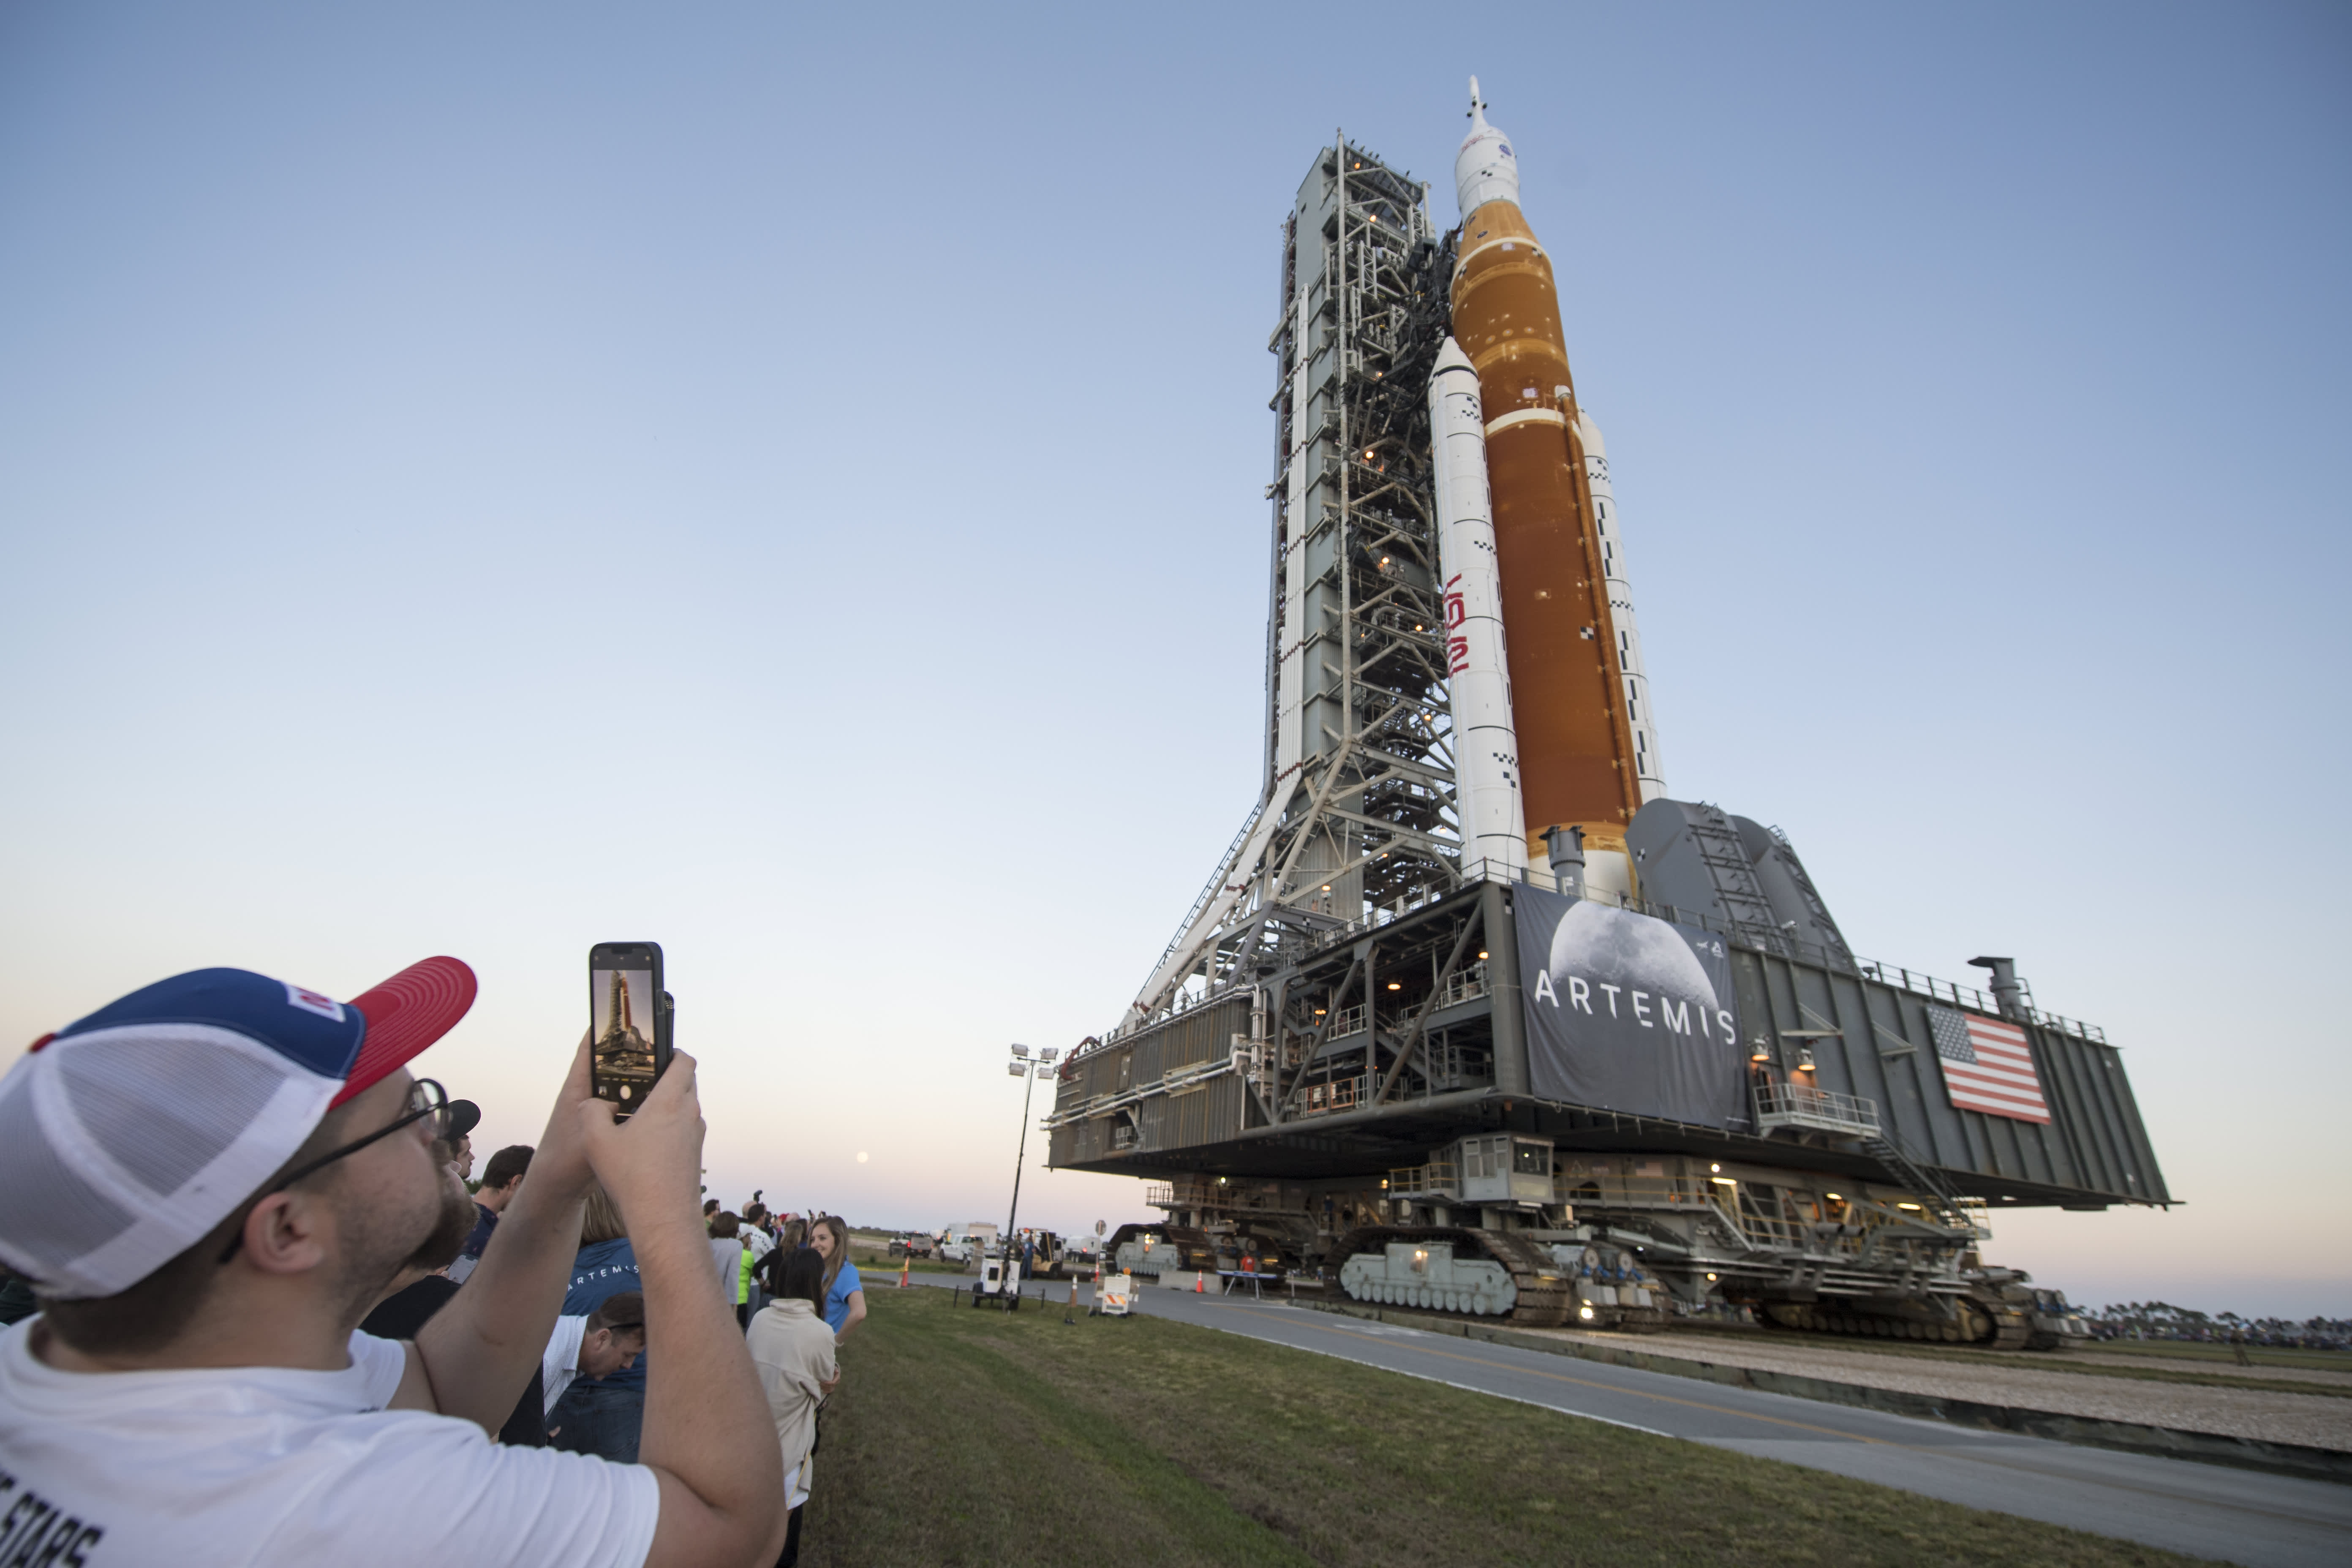 NASA postpones Artemis 1 rocket launch due to issues during countdown